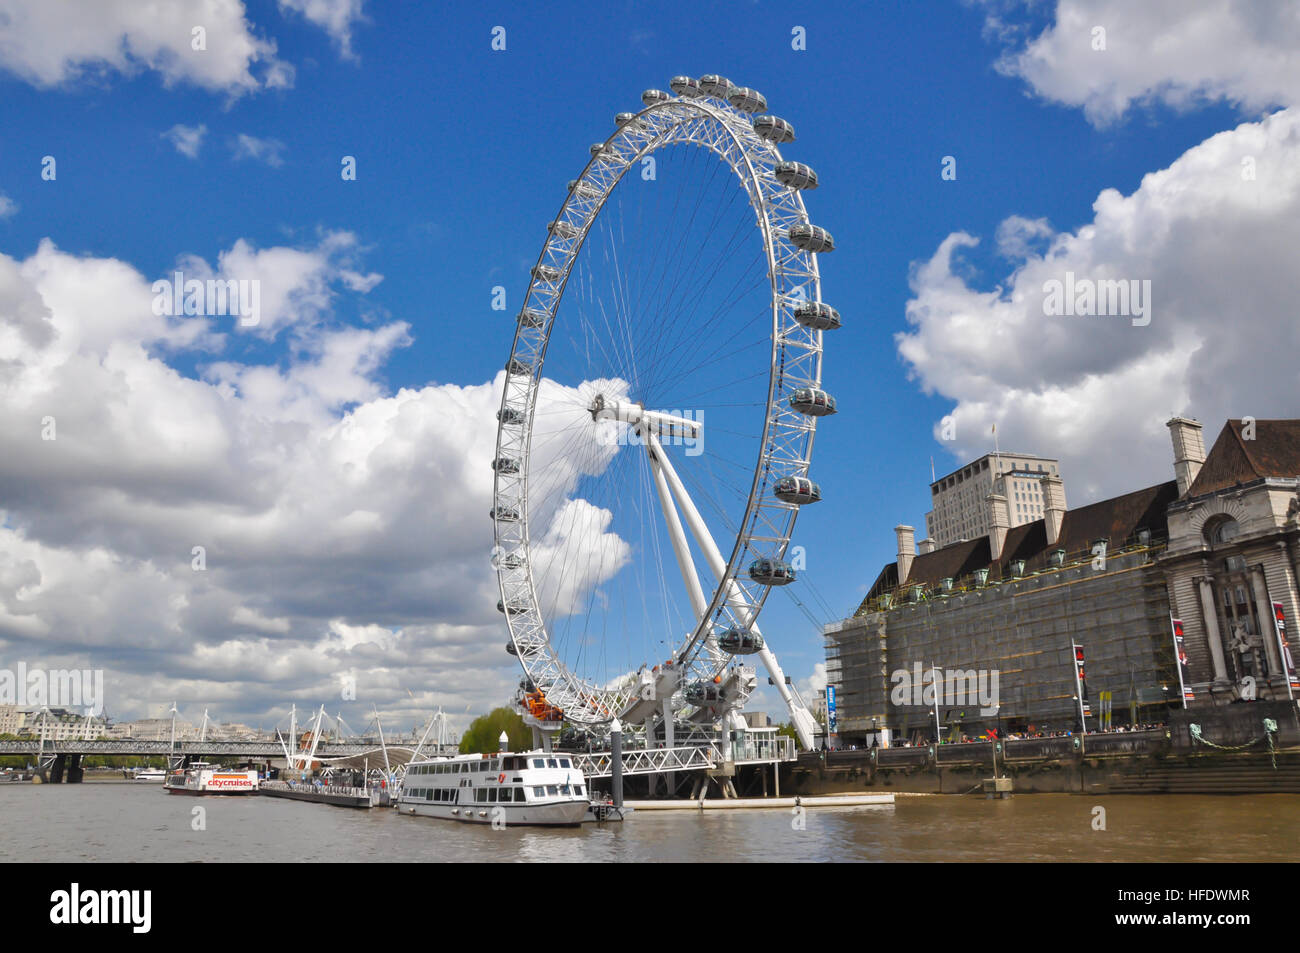 London Eye or Millennium Wheel carousel Ferris wheel, London UK Stock Photo